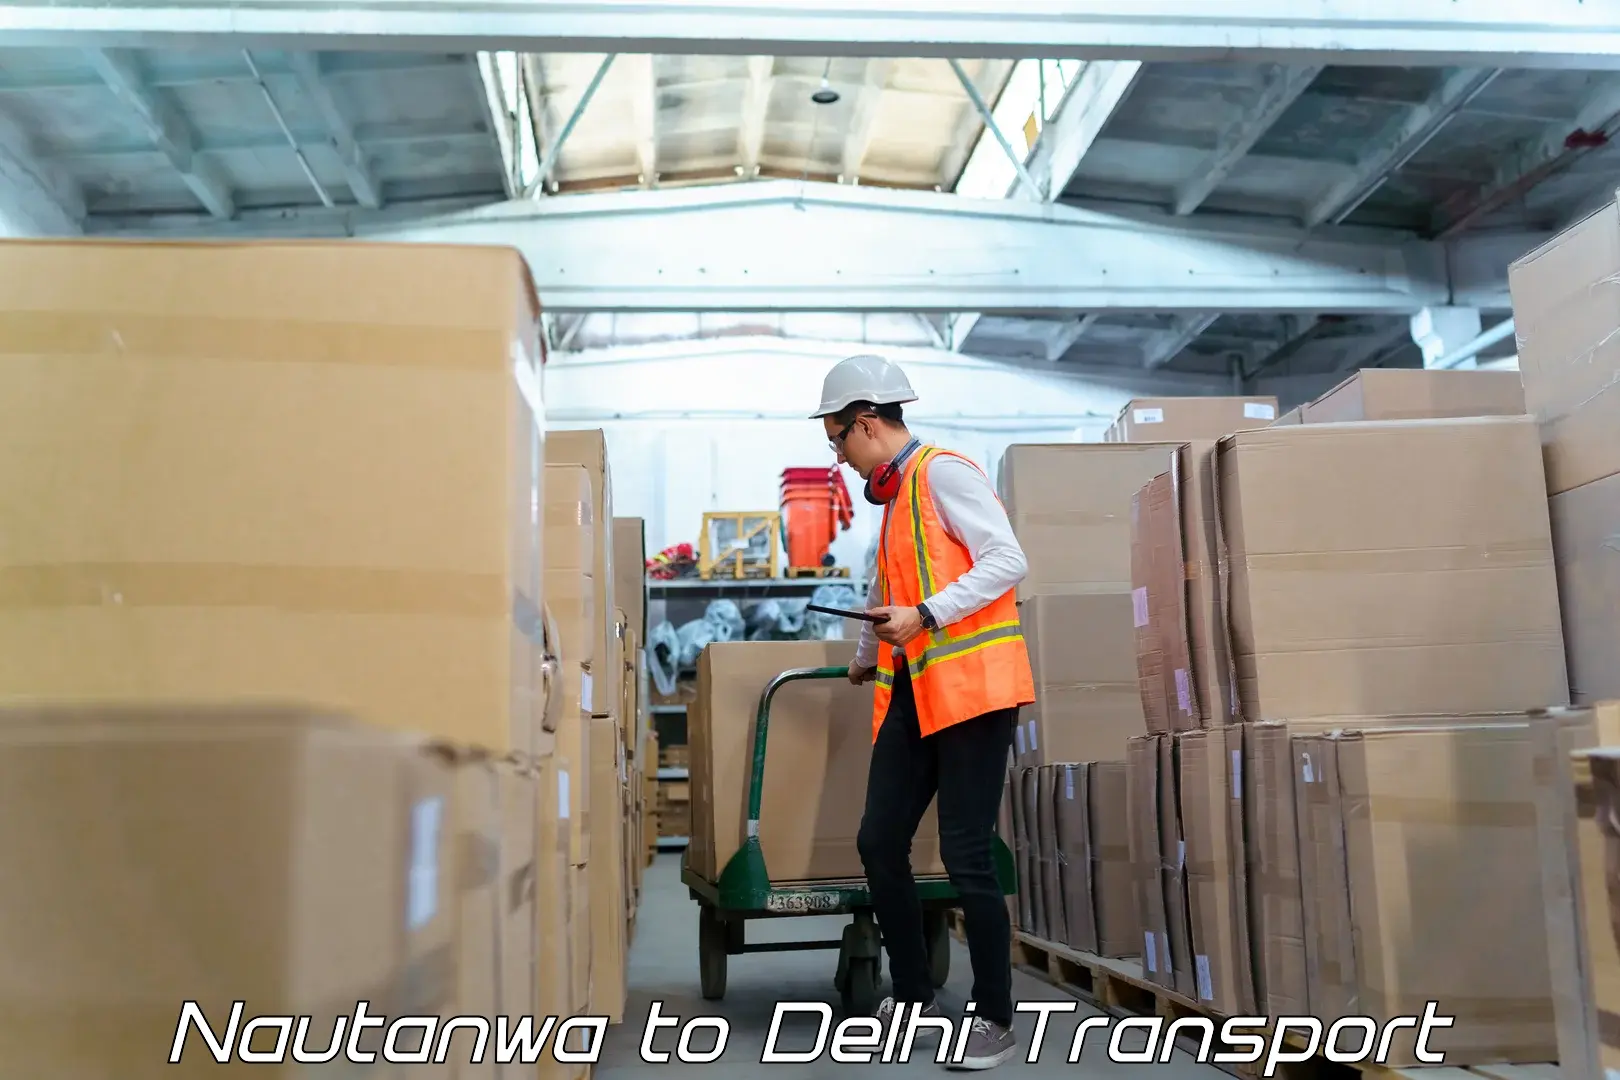 Daily transport service Nautanwa to University of Delhi